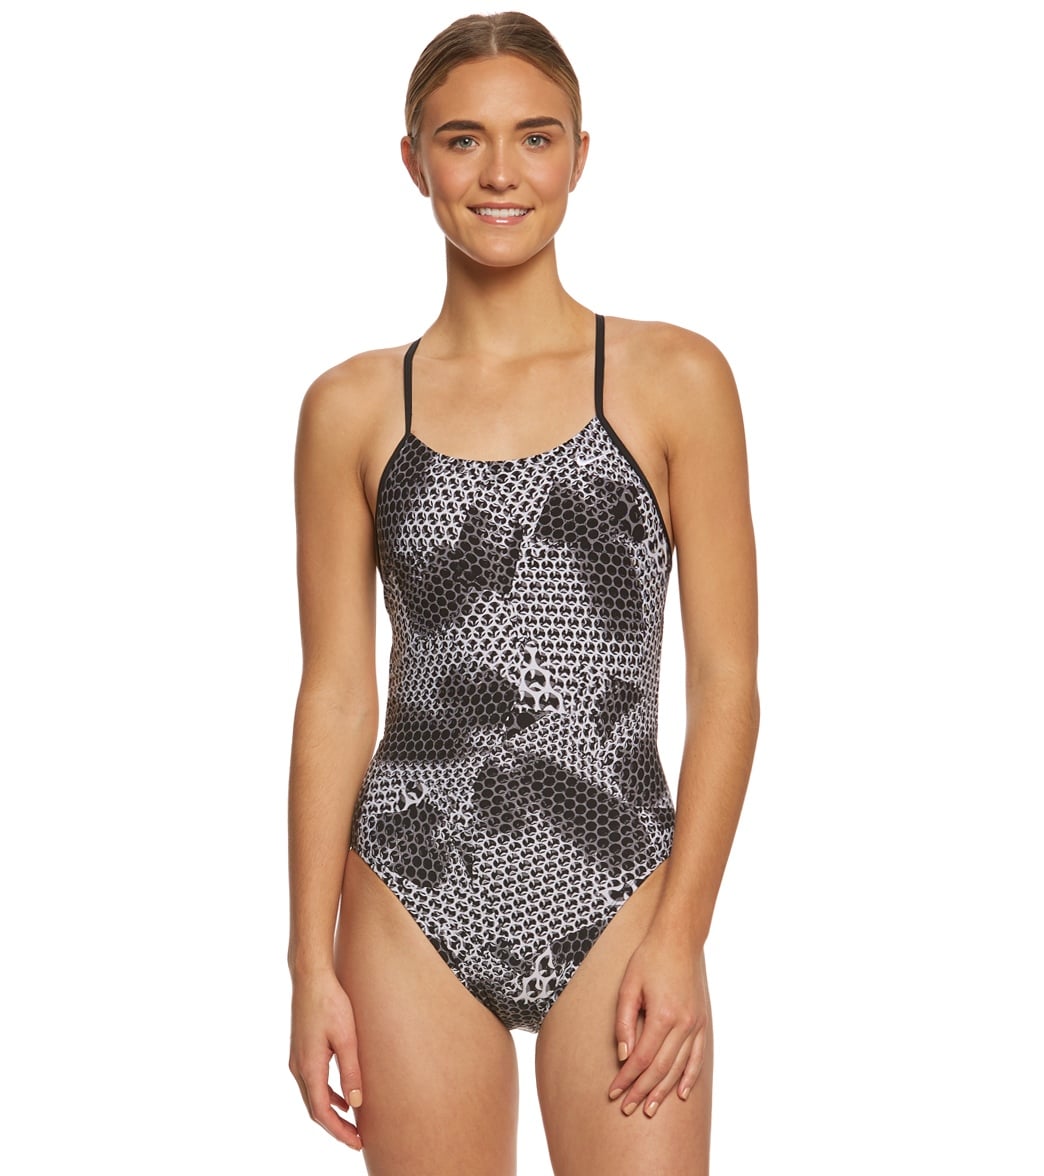 Nike Women's Nova Spark Cut Out One Piece Swimsuit - Black 28 Polyester/Spandex - Swimoutlet.com